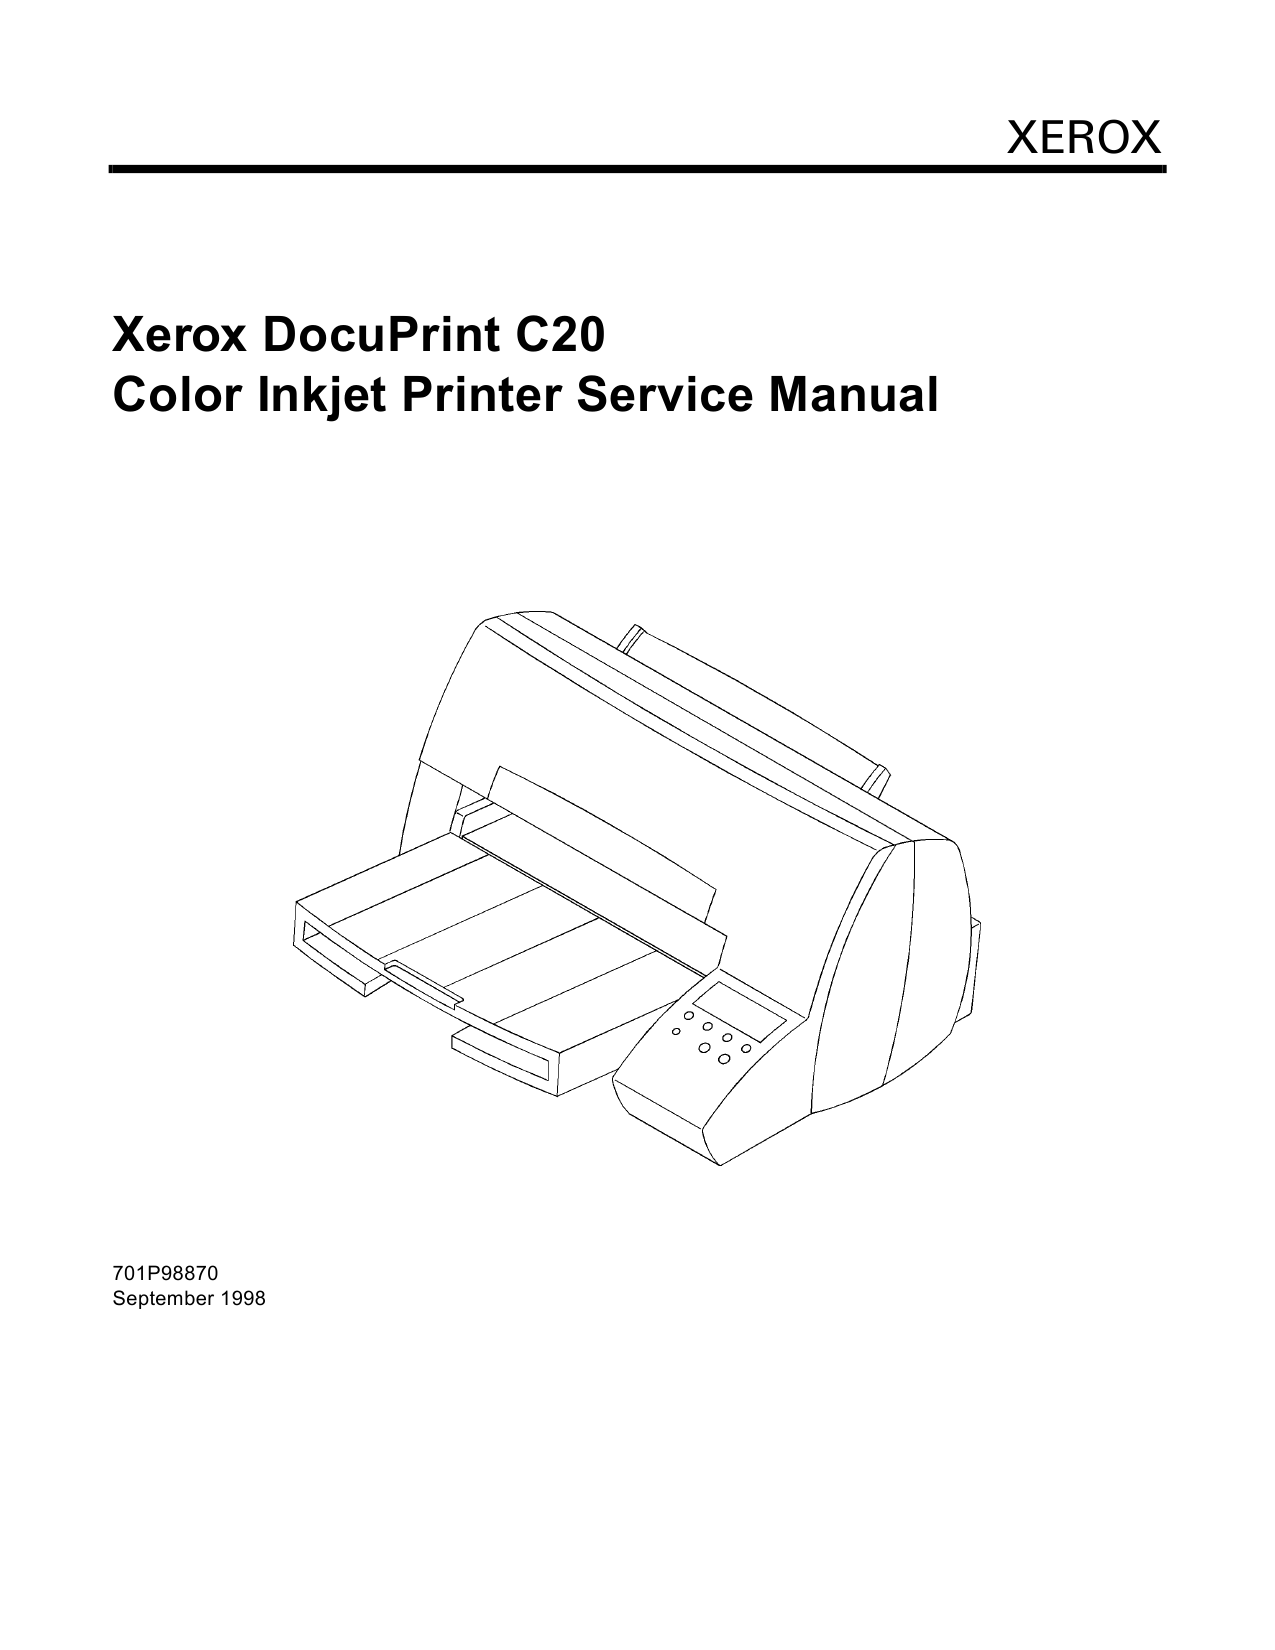 Xerox DocuPrint C20 Parts List and Service Manual-1